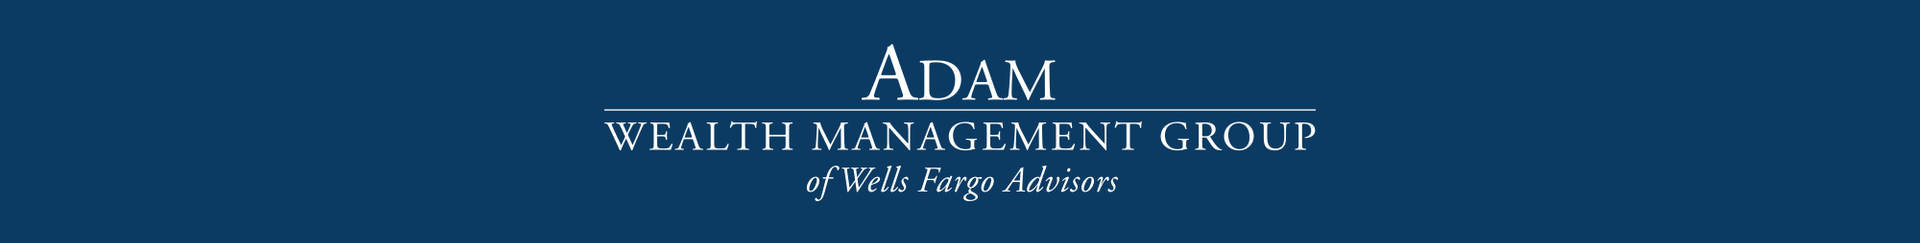 Adam Wealth Management Group of Wells Fargo Advisors